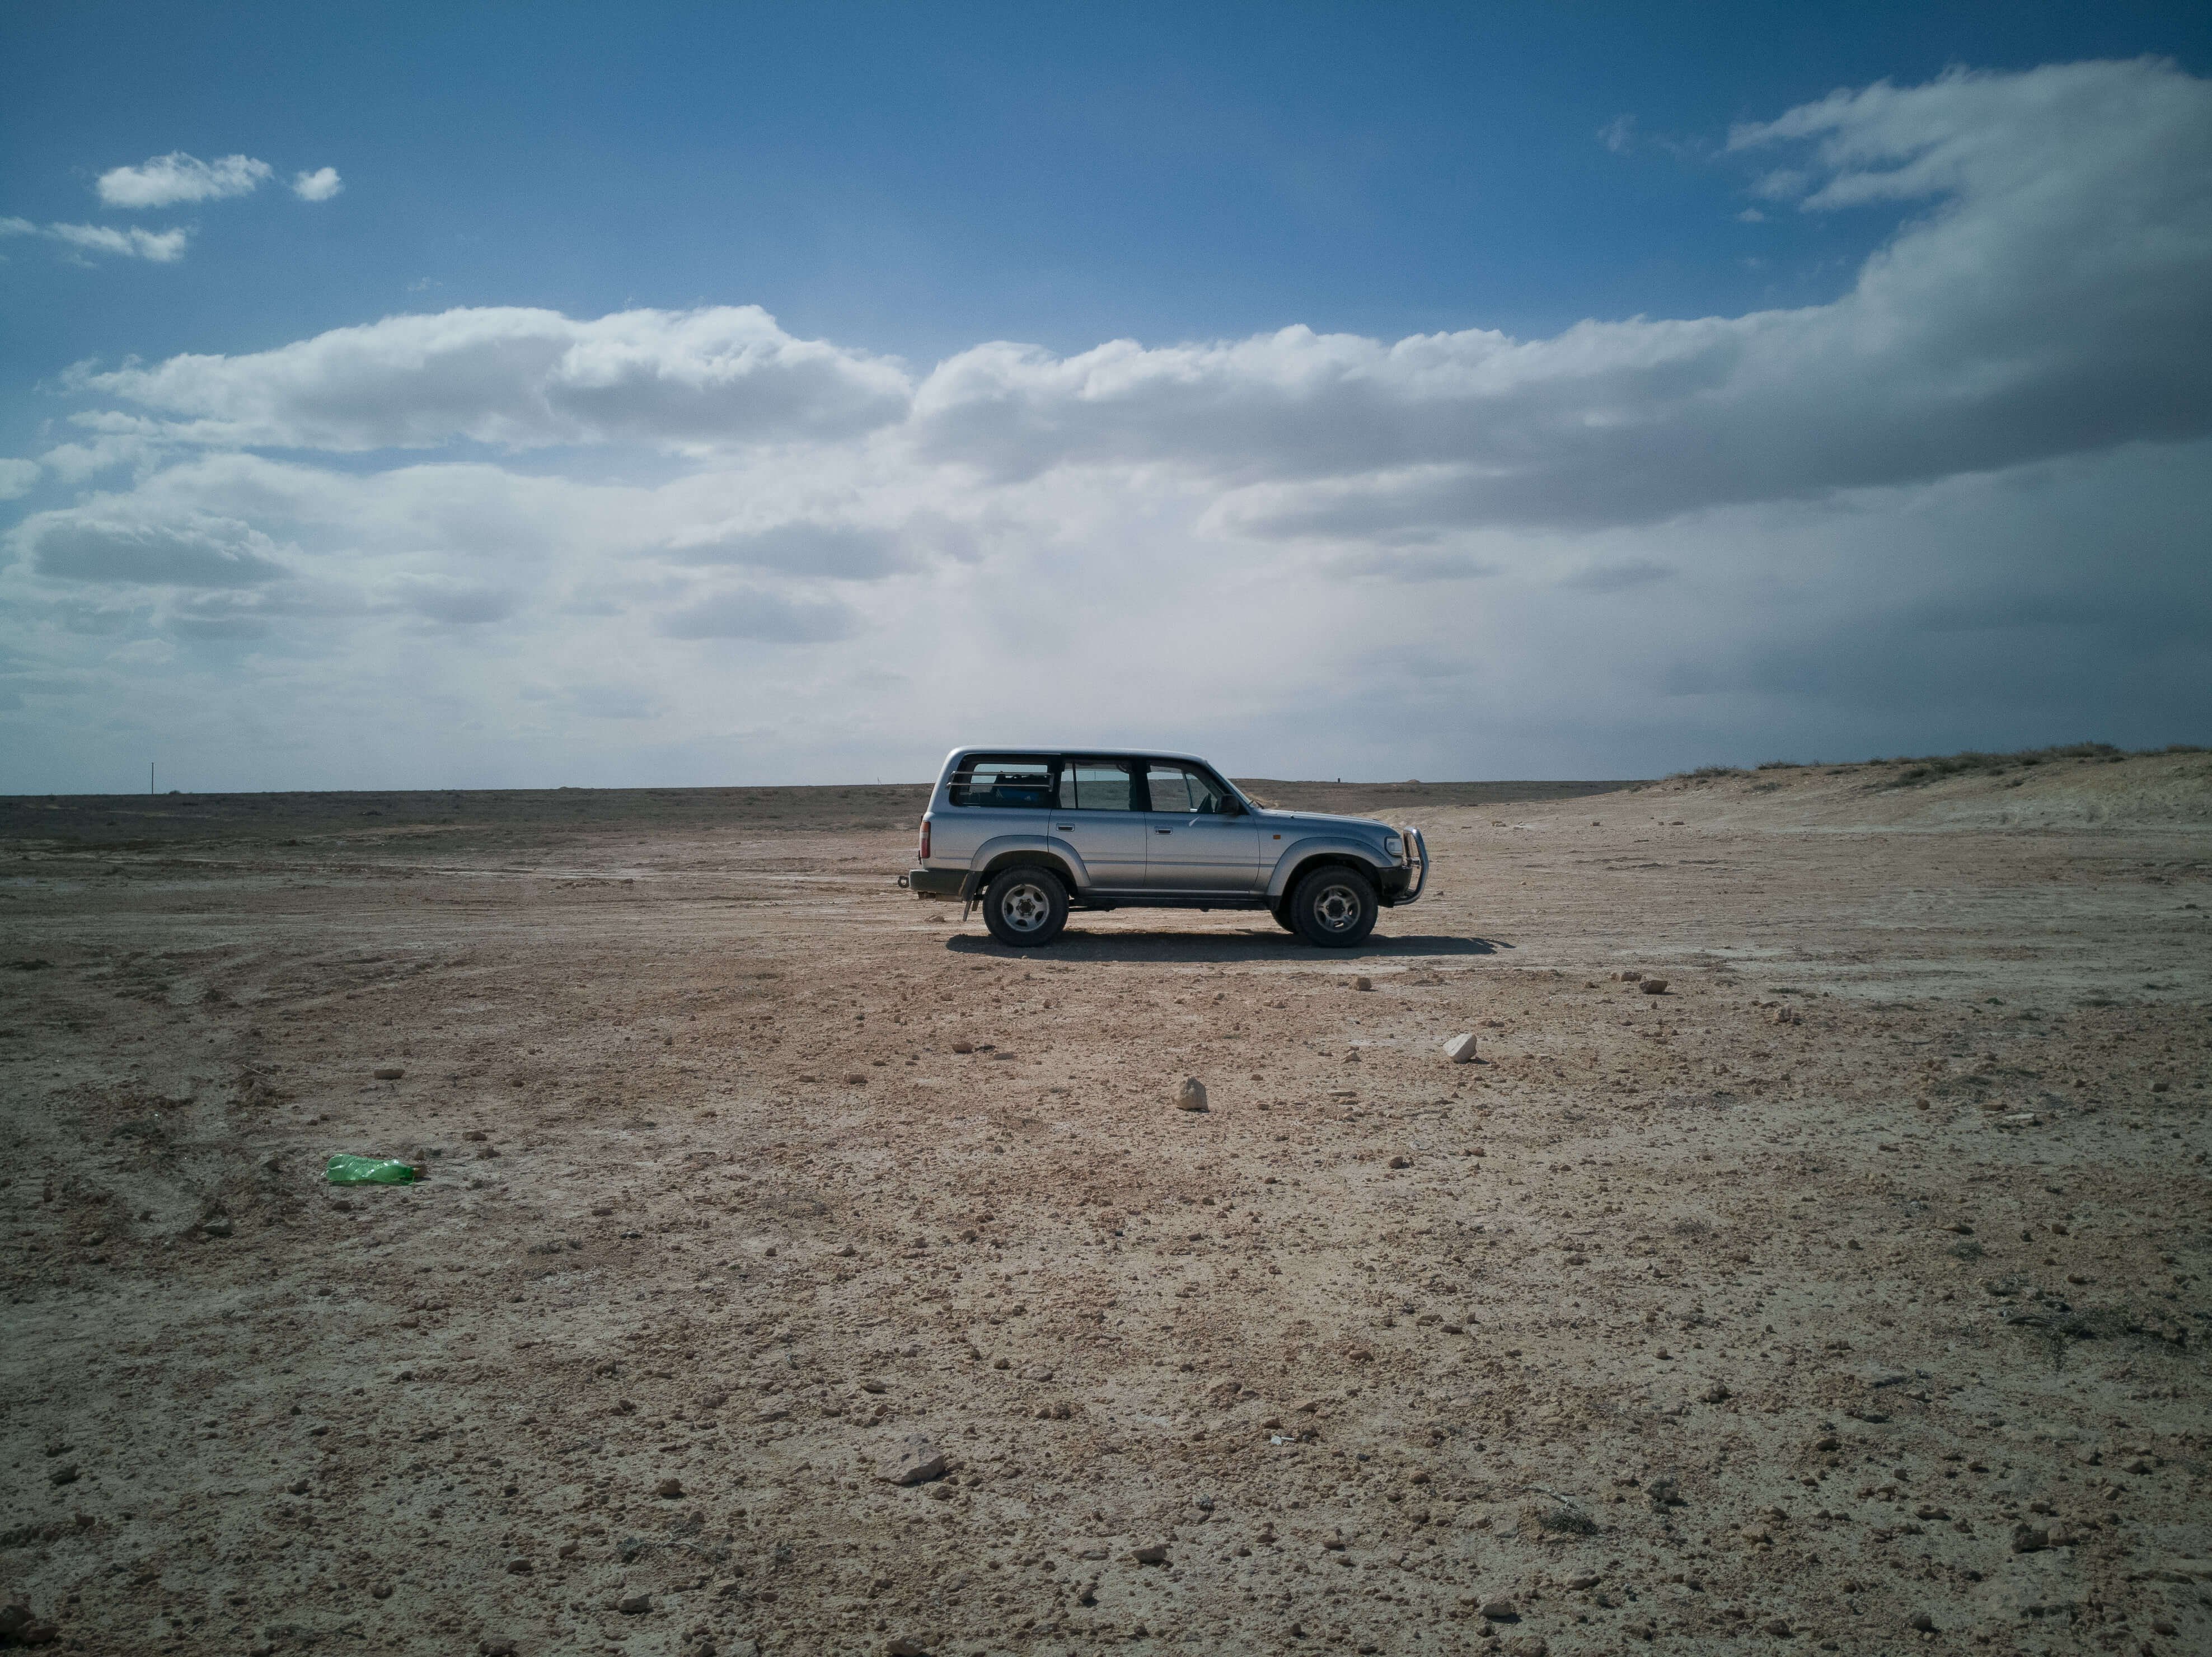 Driving through the Aral Sea